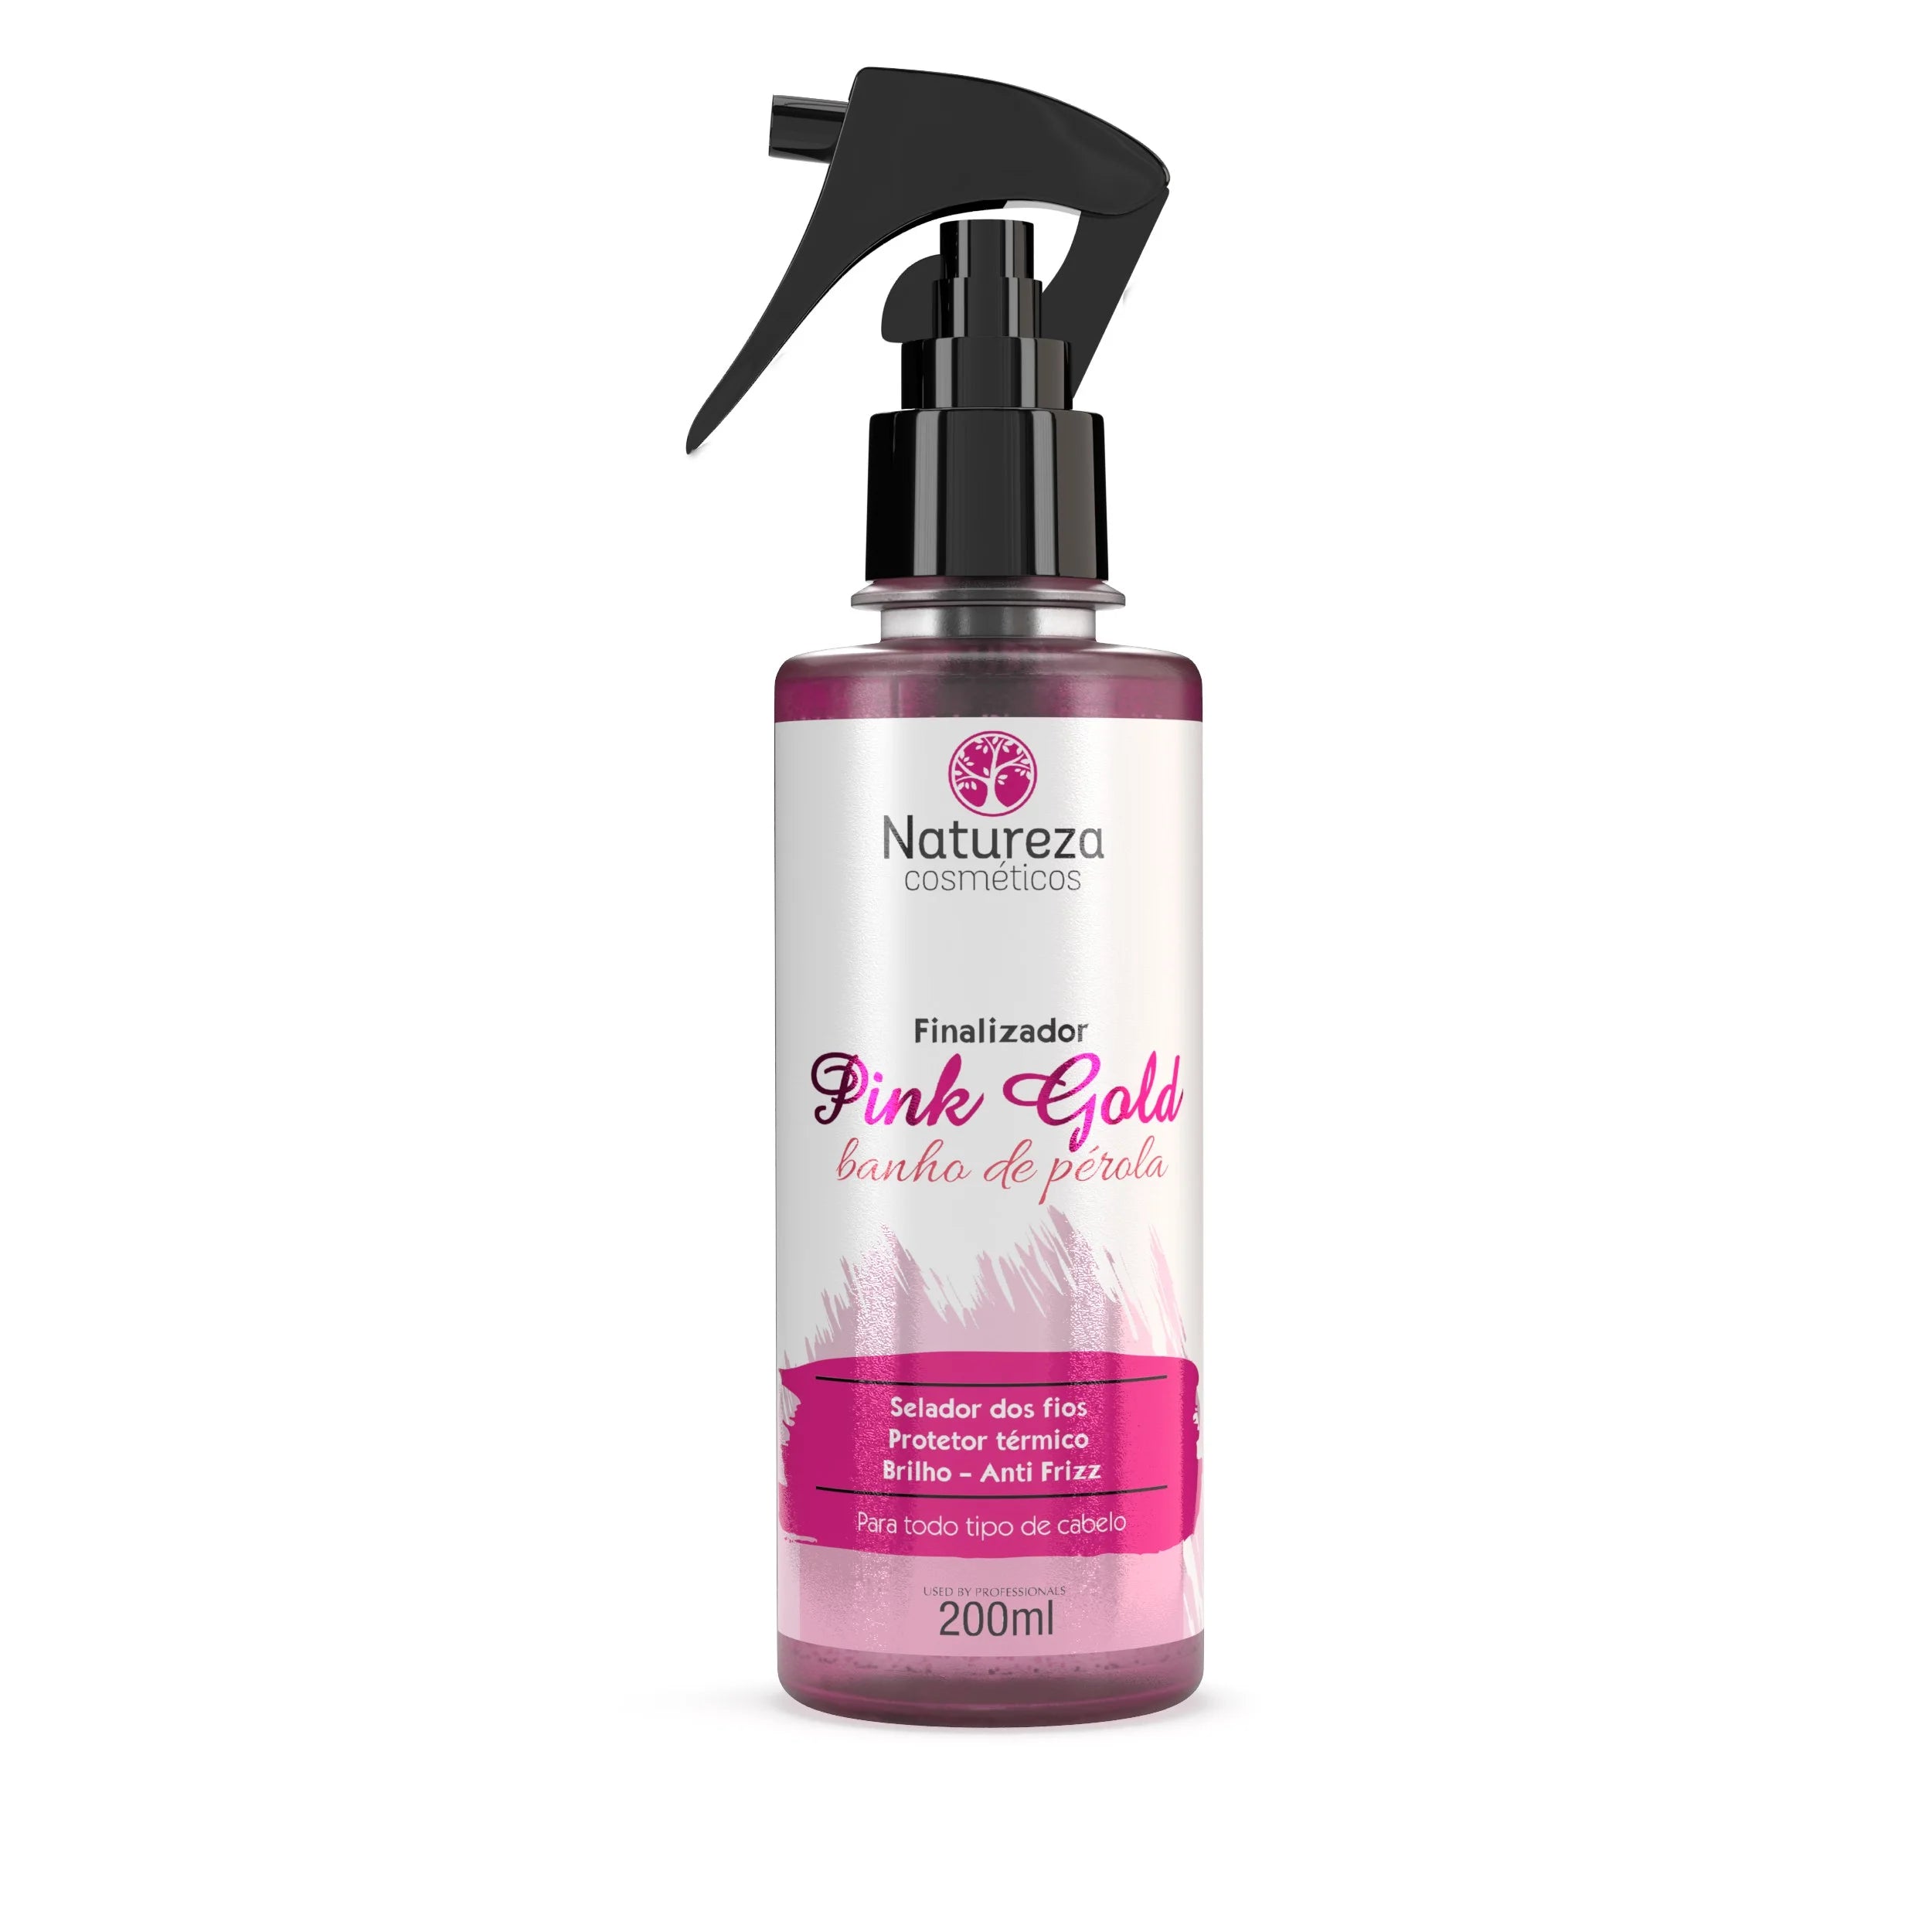 Natureza Cosmetics Hair Finisher Pink Gold Finisher Pearl Bath Thermal Protector No Frizz Spray 200ml - Natureza